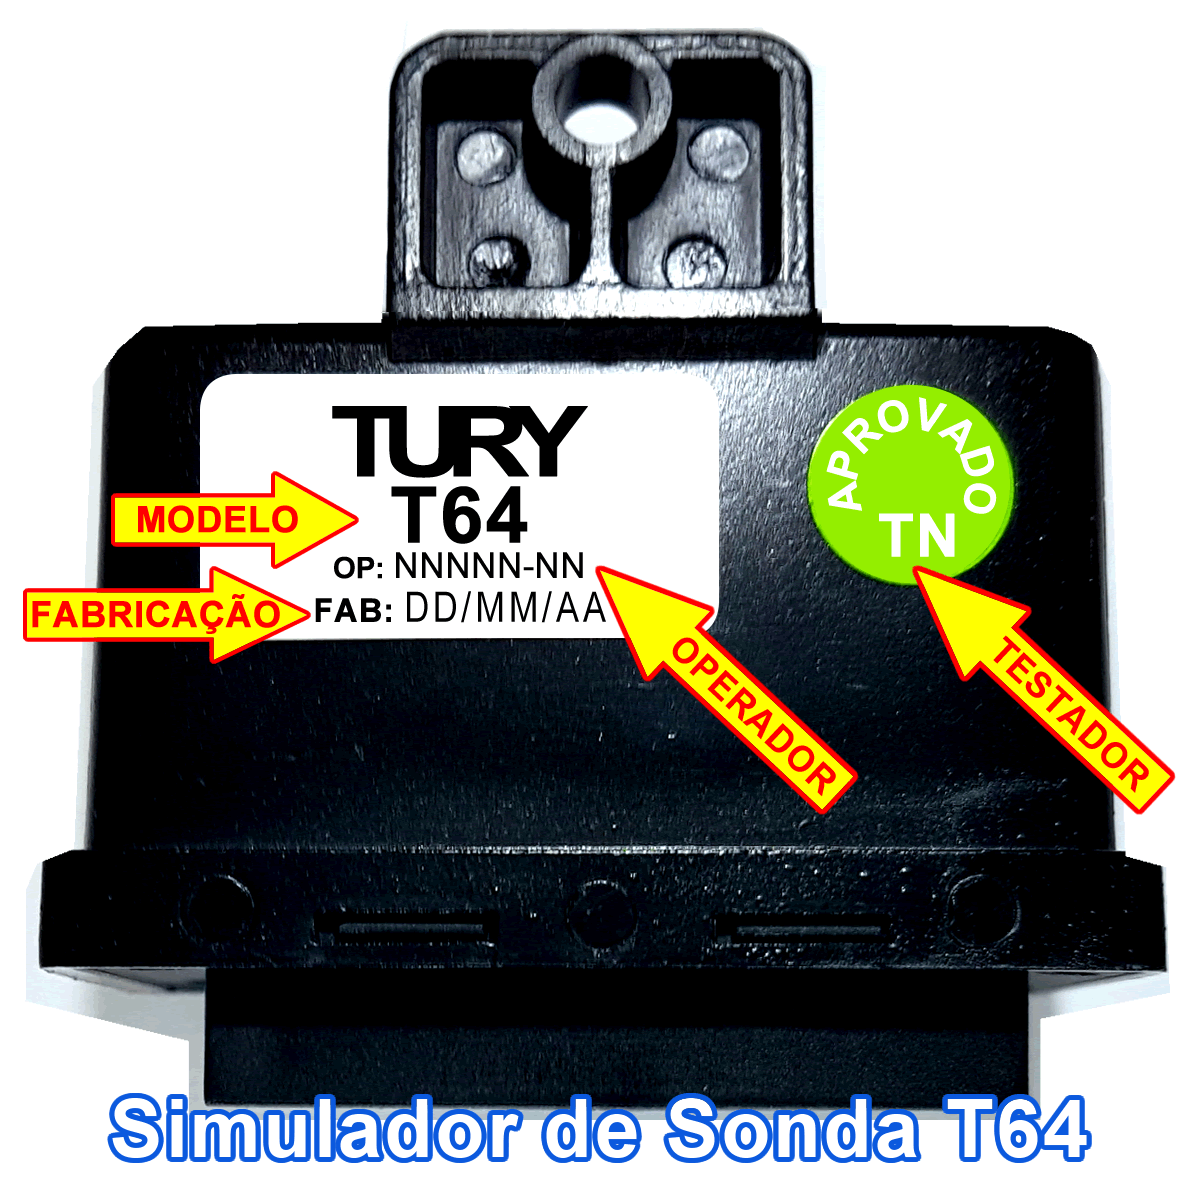 Chave Comutadora T1000A e Simulador de Sonda T634 TURY GAS